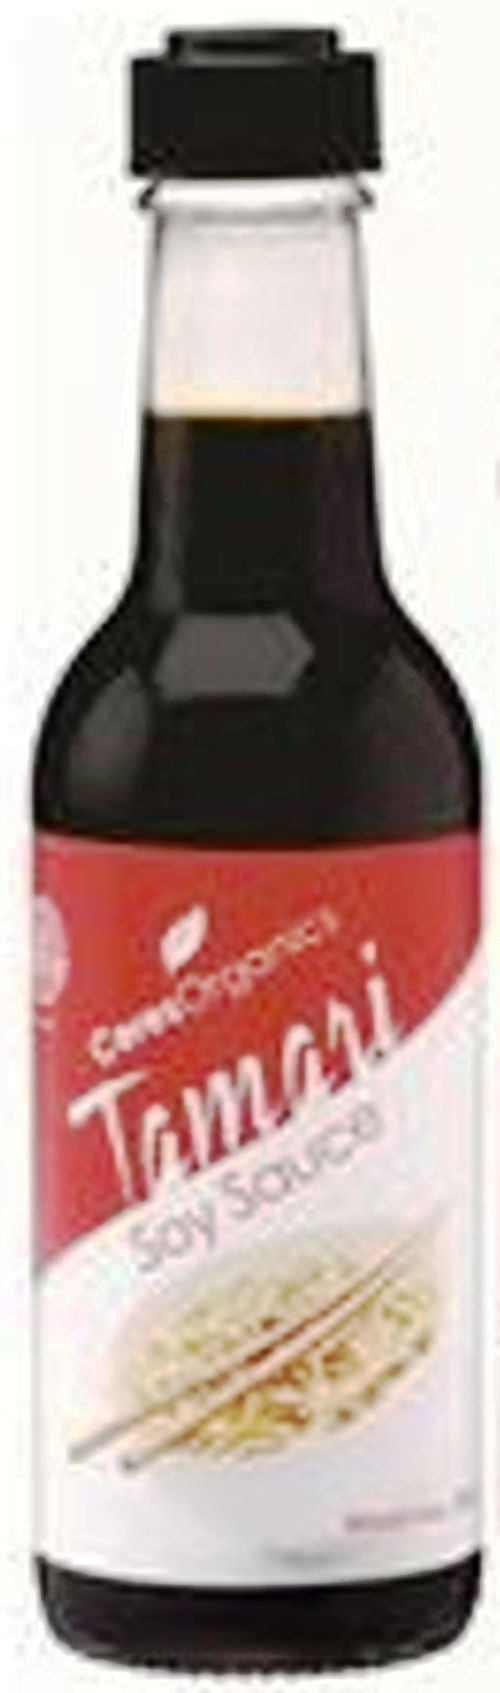 Tamari Wheat Free Soy Sauce Ceres Certified Organic(250ml,glass)